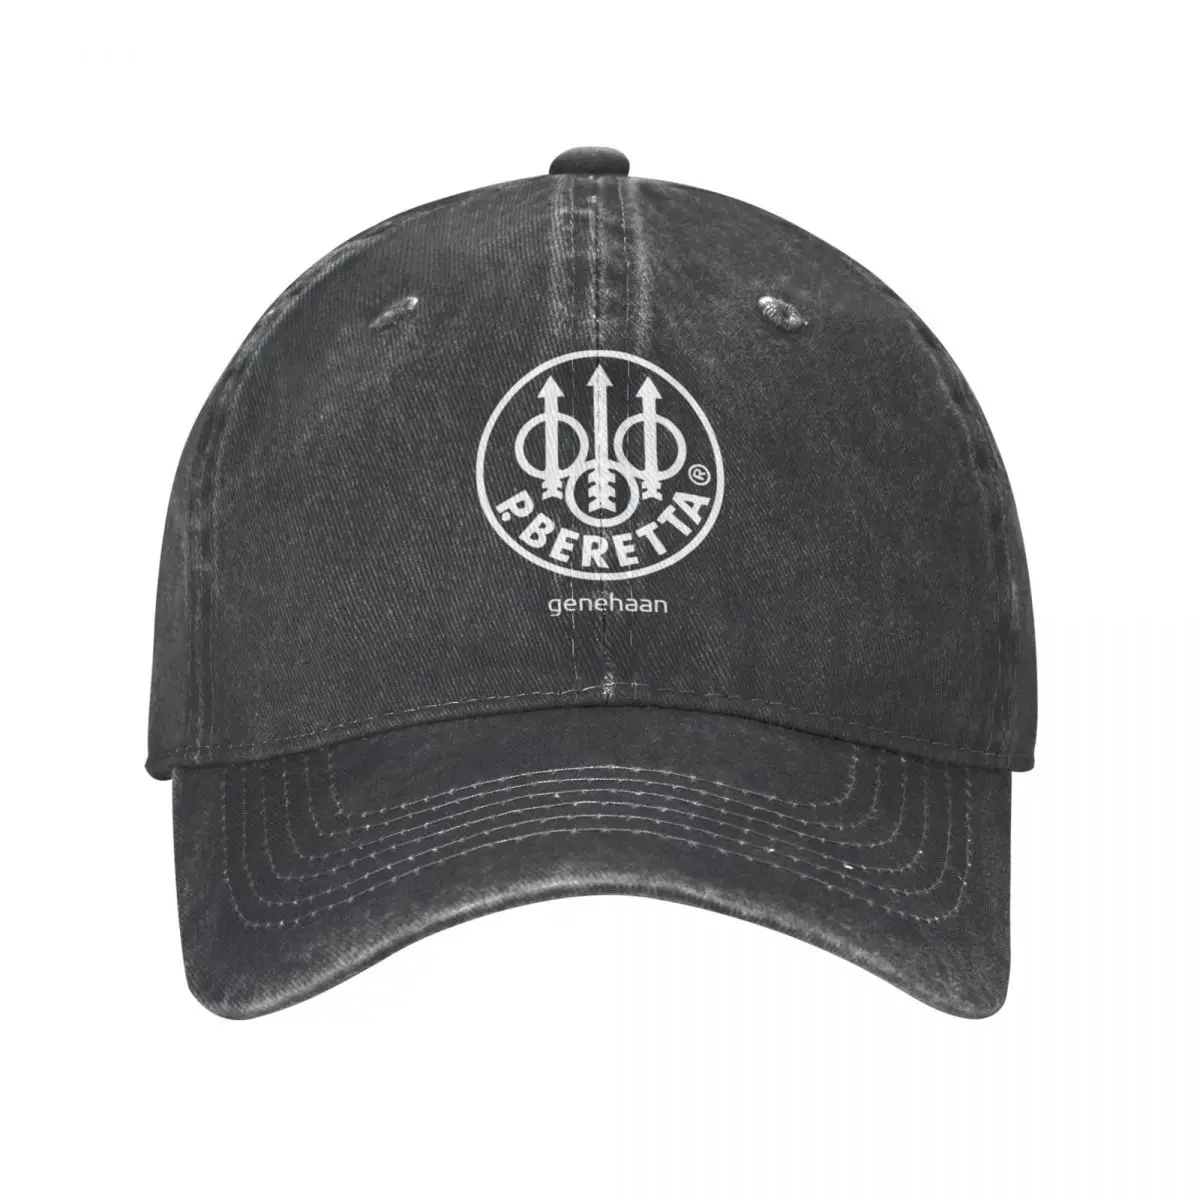 

Beretta Guns Unisex Baseball Caps Distressed Denim Hats Cap Vintage Outdoor Activities Unstructured Soft Snapback Hat